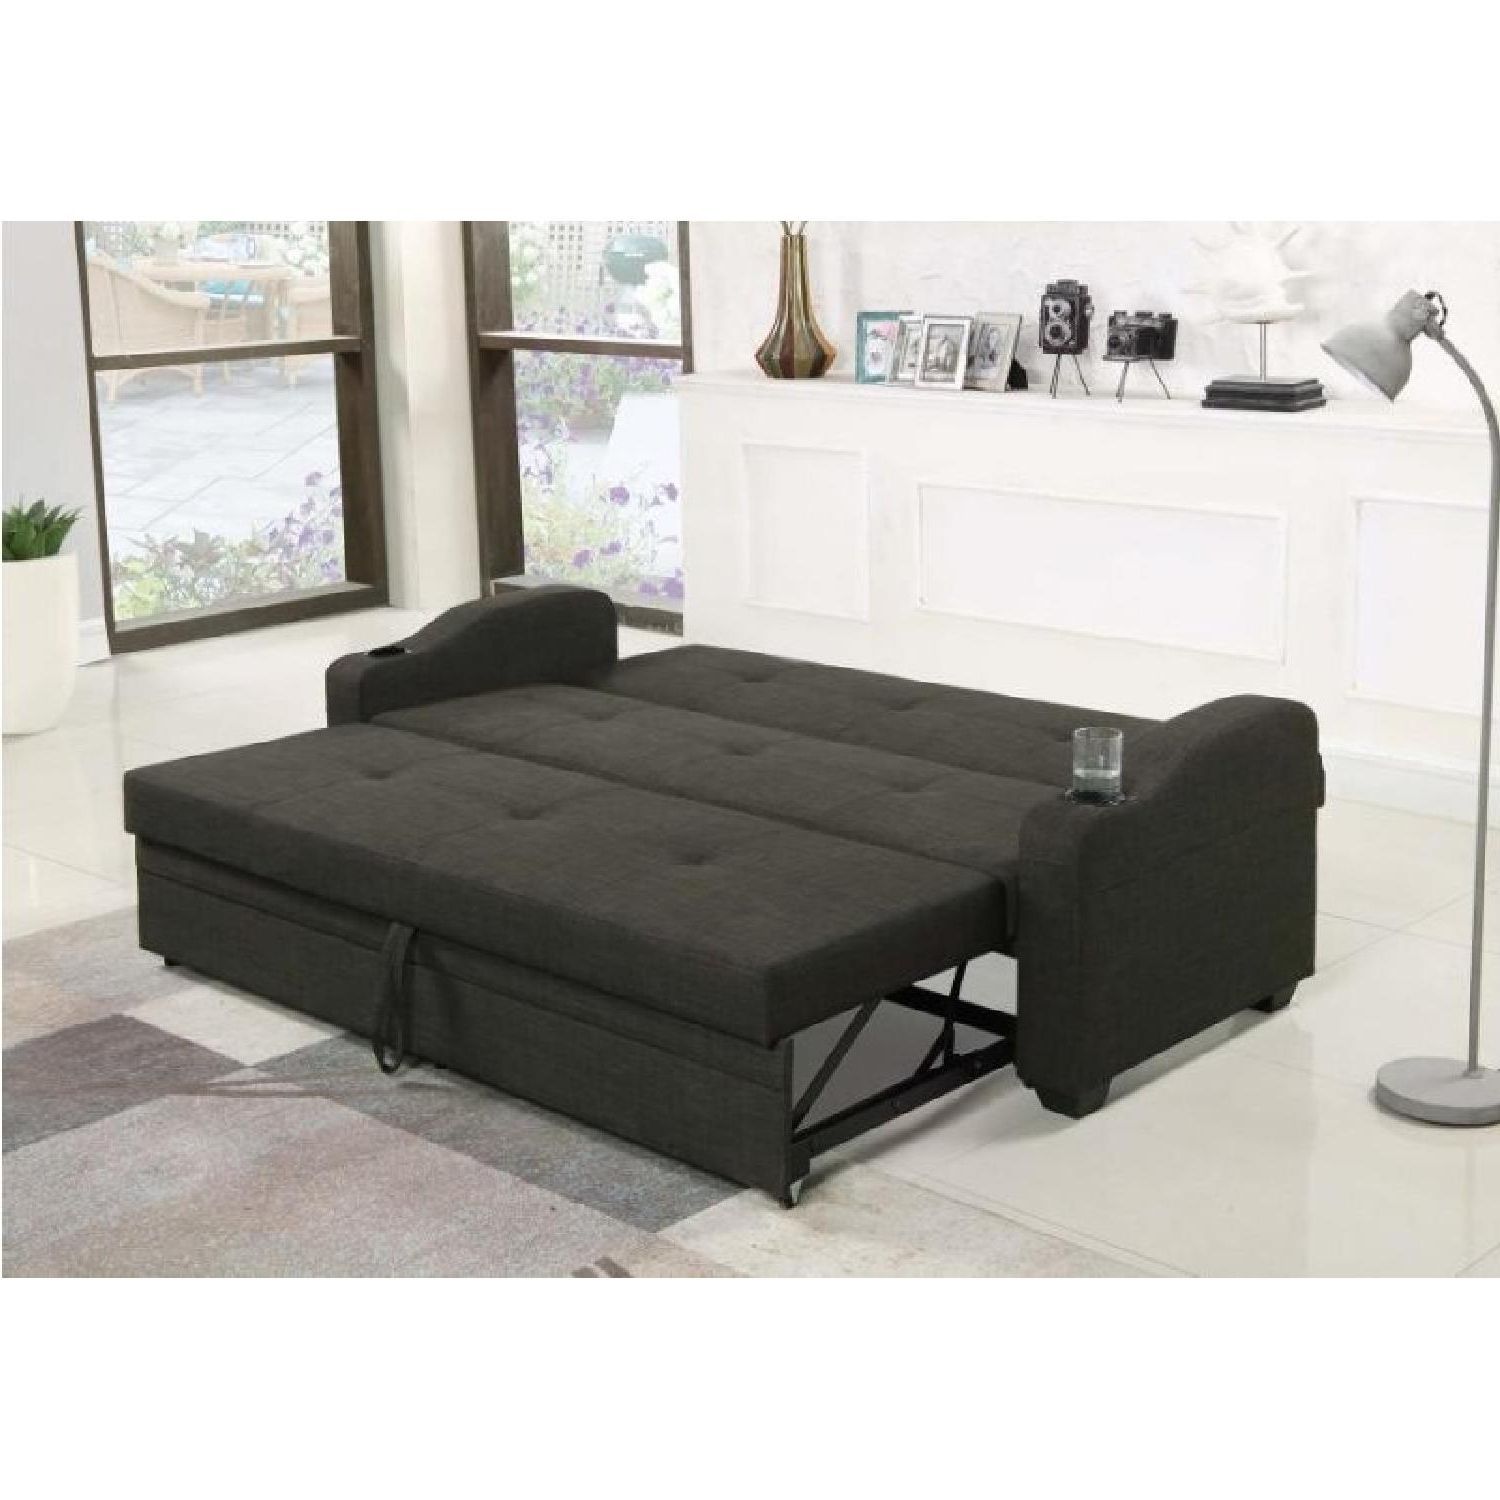 Charcoal Grey Pull Out Sleeper Sofa – Aptdeco Inside 3 In 1 Gray Pull Out Sleeper Sofas (View 12 of 20)